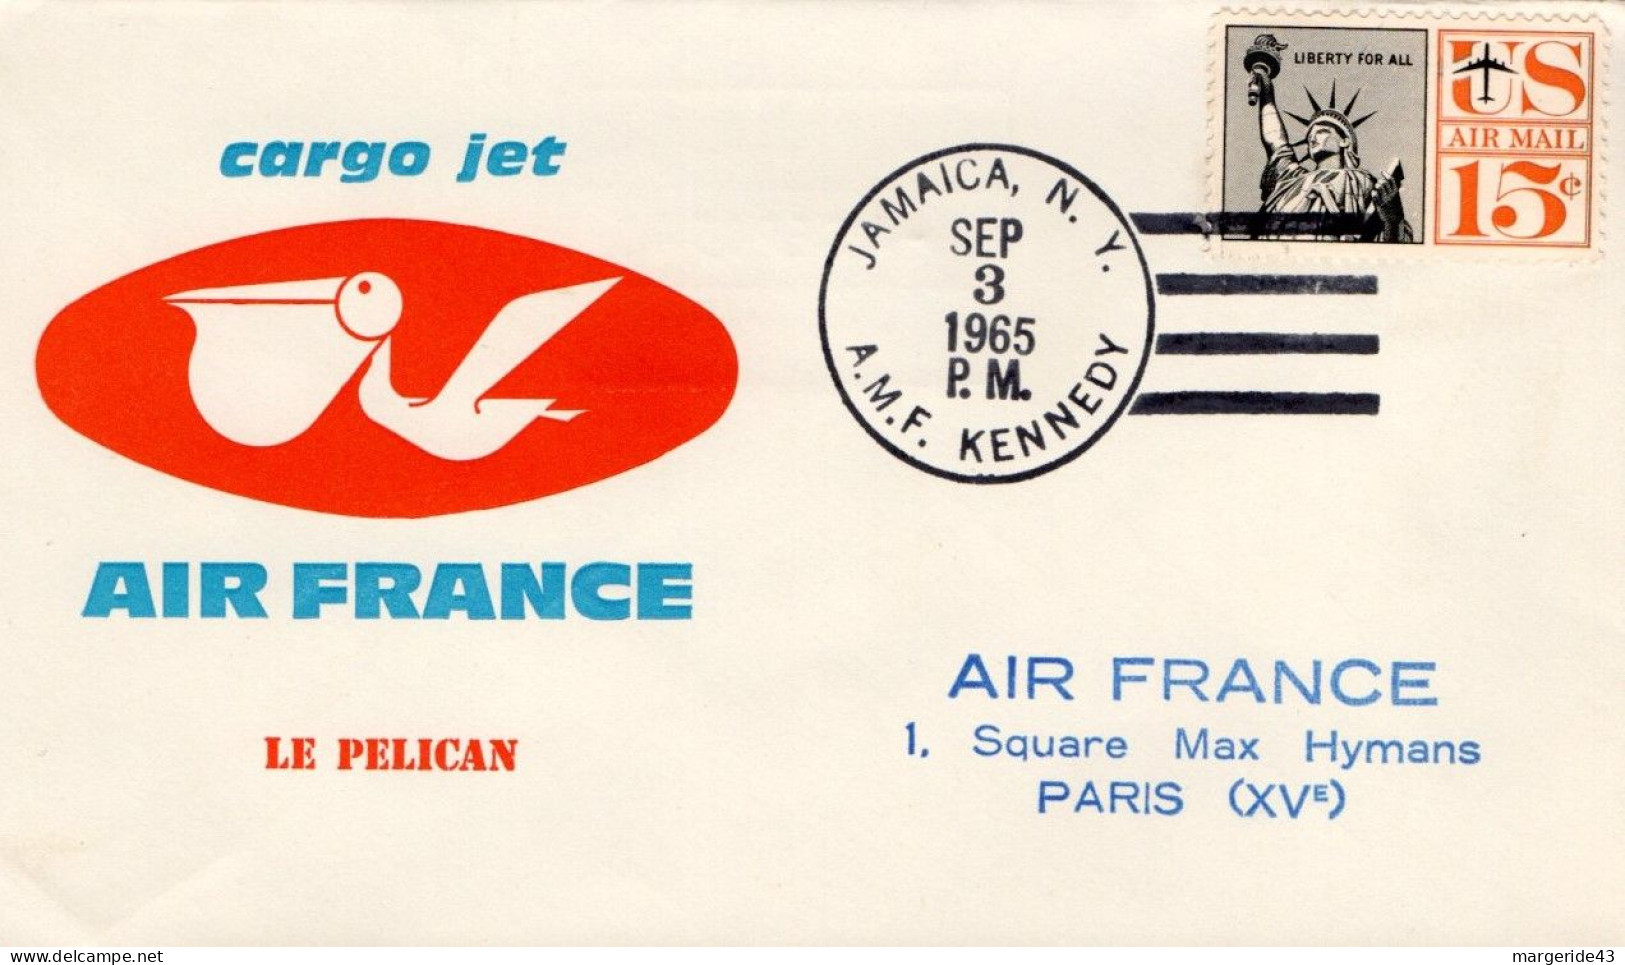 USA ETATS UNIS VOL CARGO JET AIR FRANCE N1965 - Event Covers